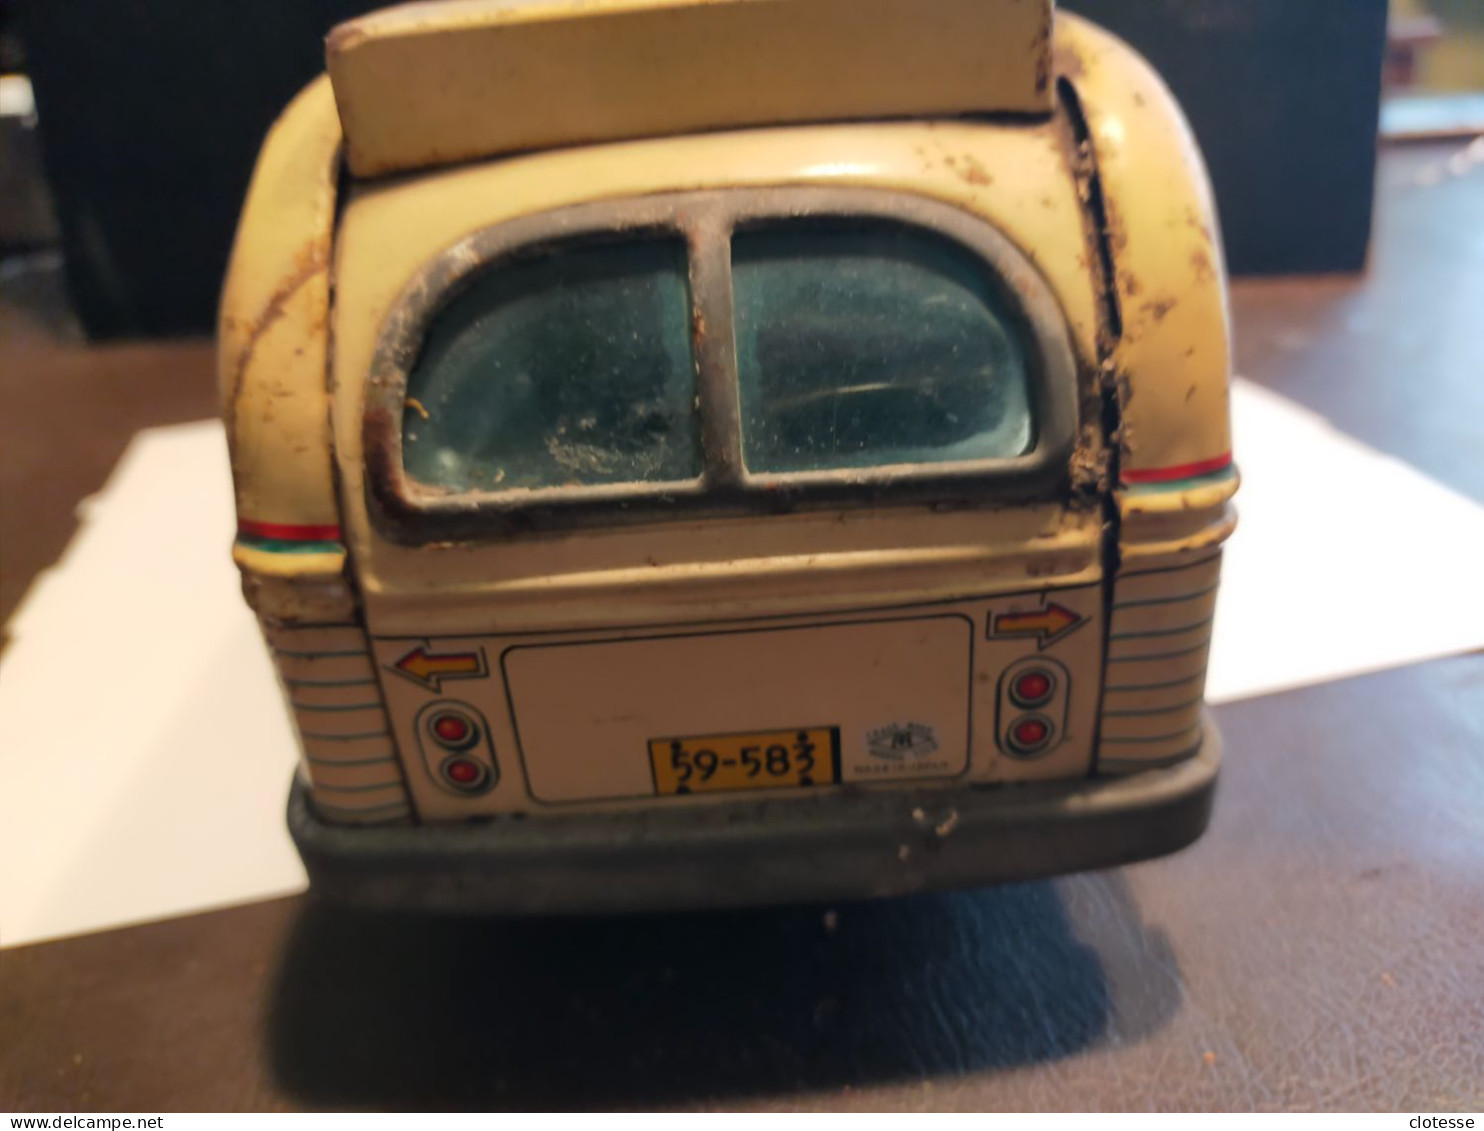 Sound Bus,autobus, - Antikspielzeug